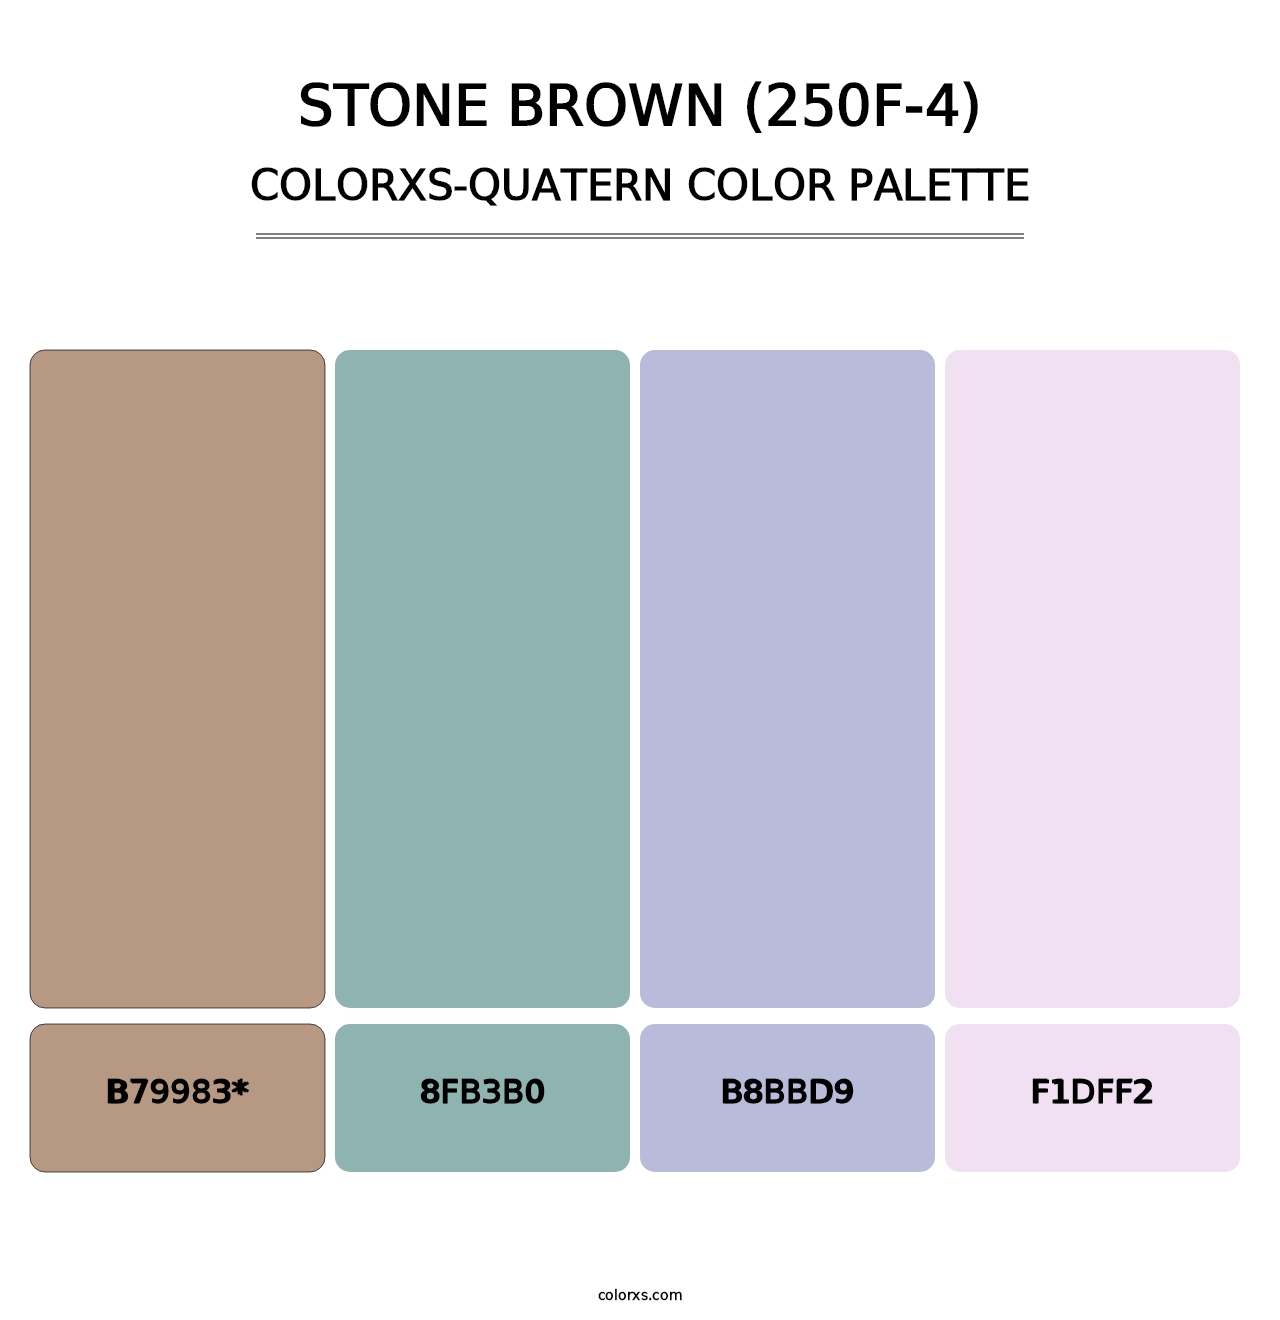 Stone Brown (250F-4) - Colorxs Quad Palette